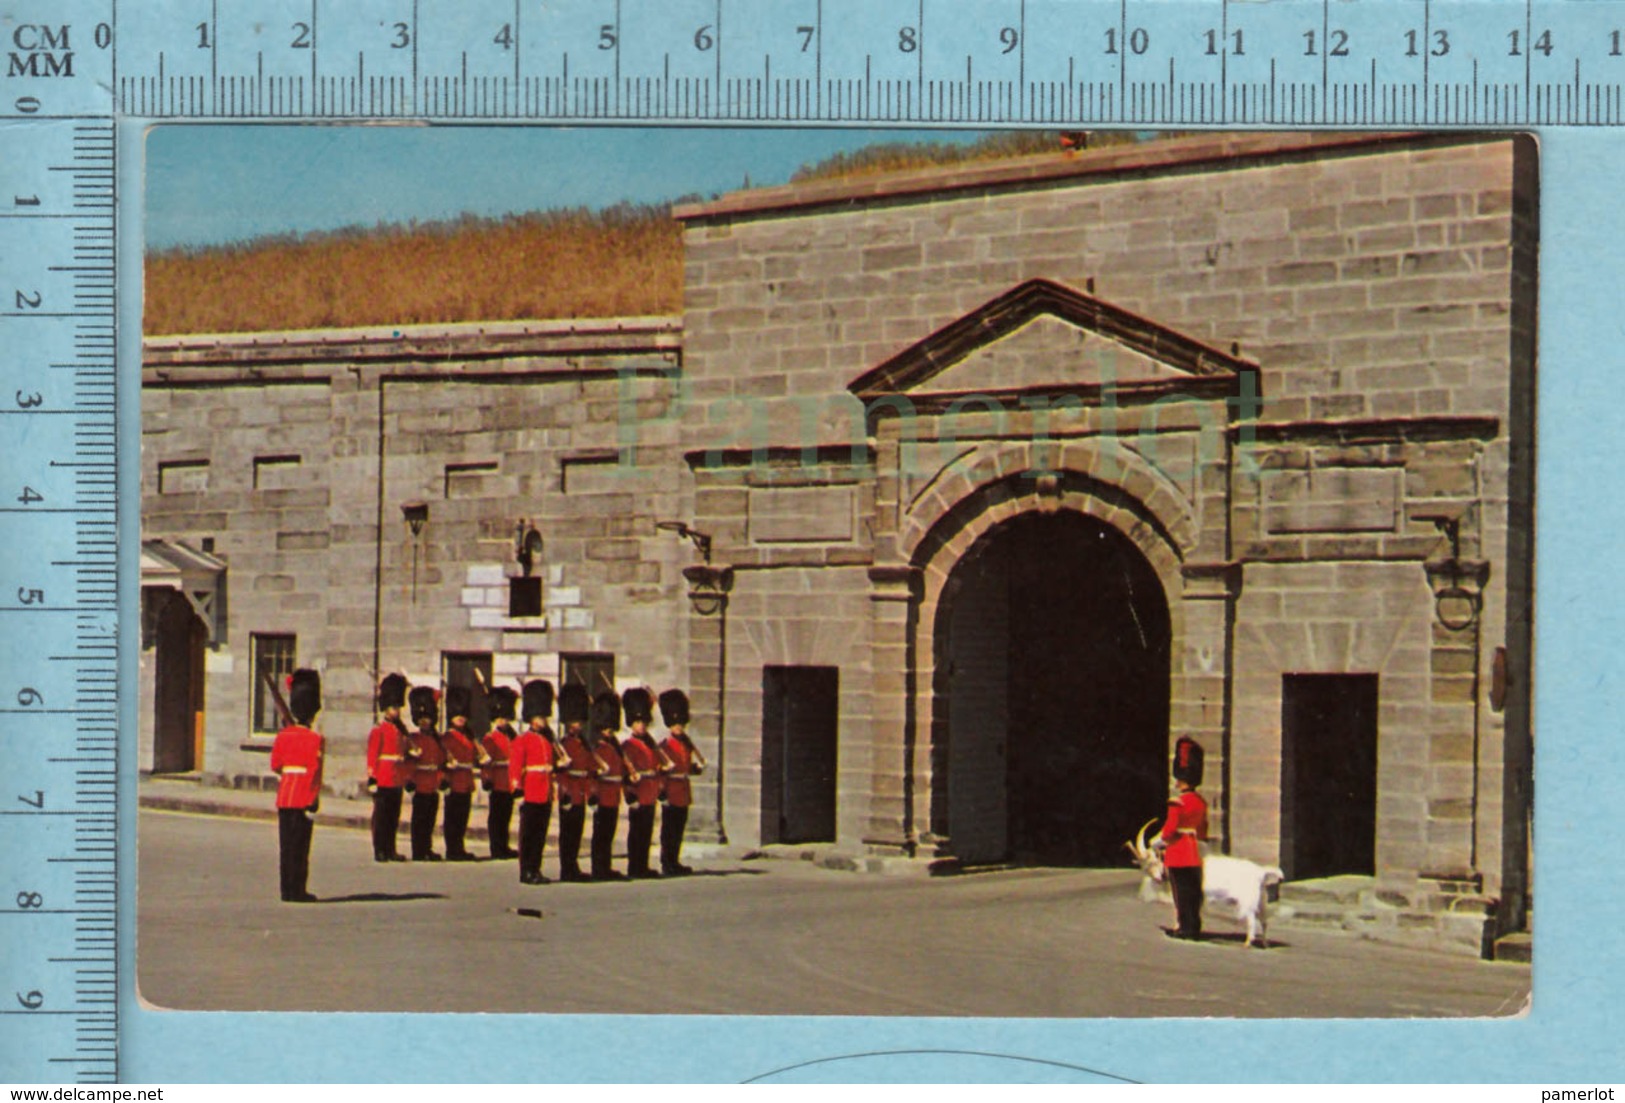 Quebec -La CitadelleChangement De Garde, Servie En 1960 - Postcard Carte Postale - Québec - La Citadelle